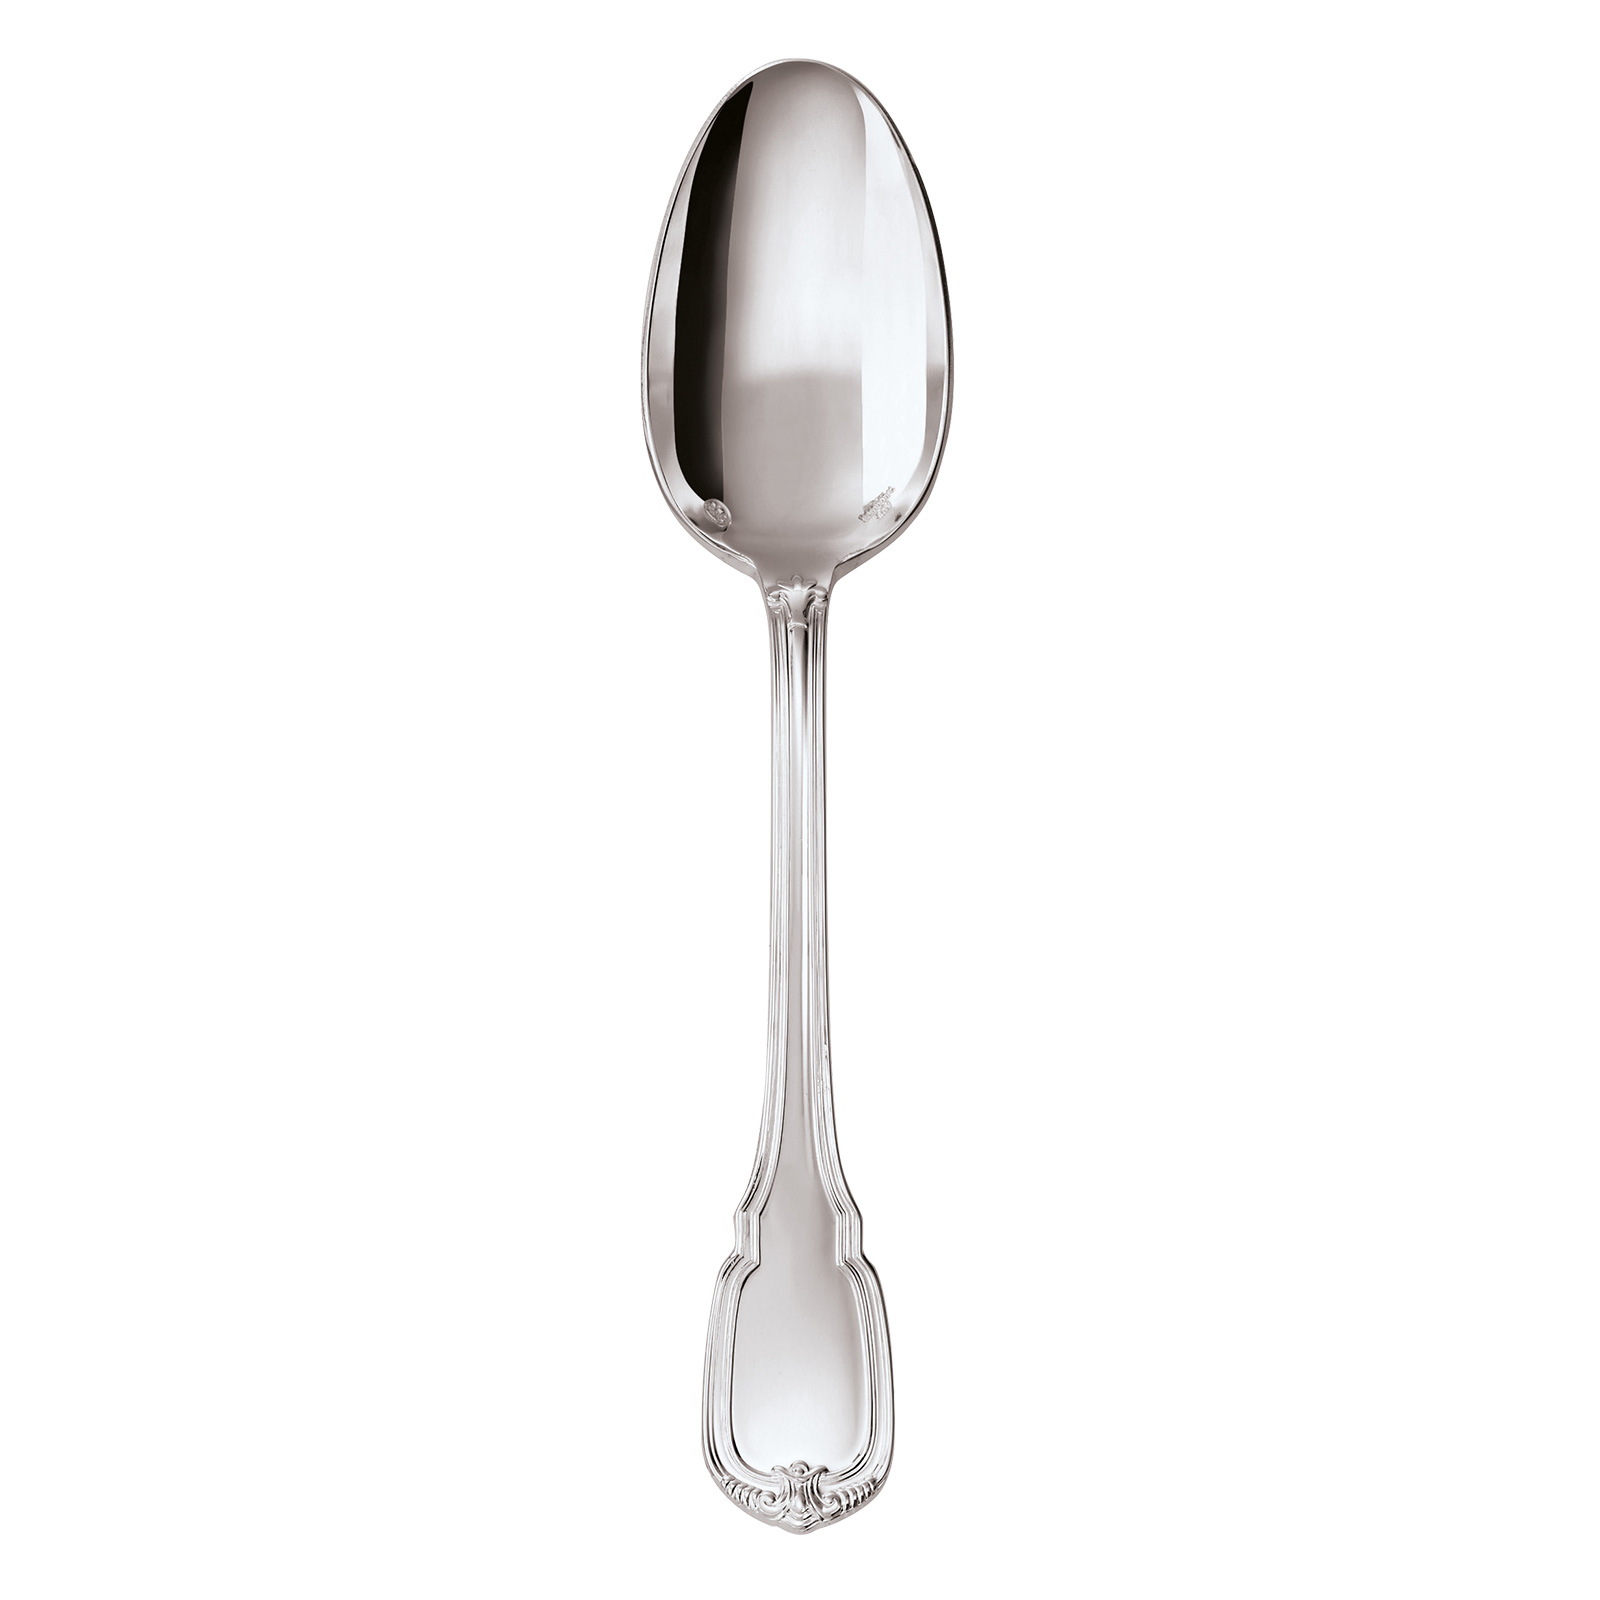 Rosenthal/Sambonet USA 52317-44 Serving Spoon, Solid